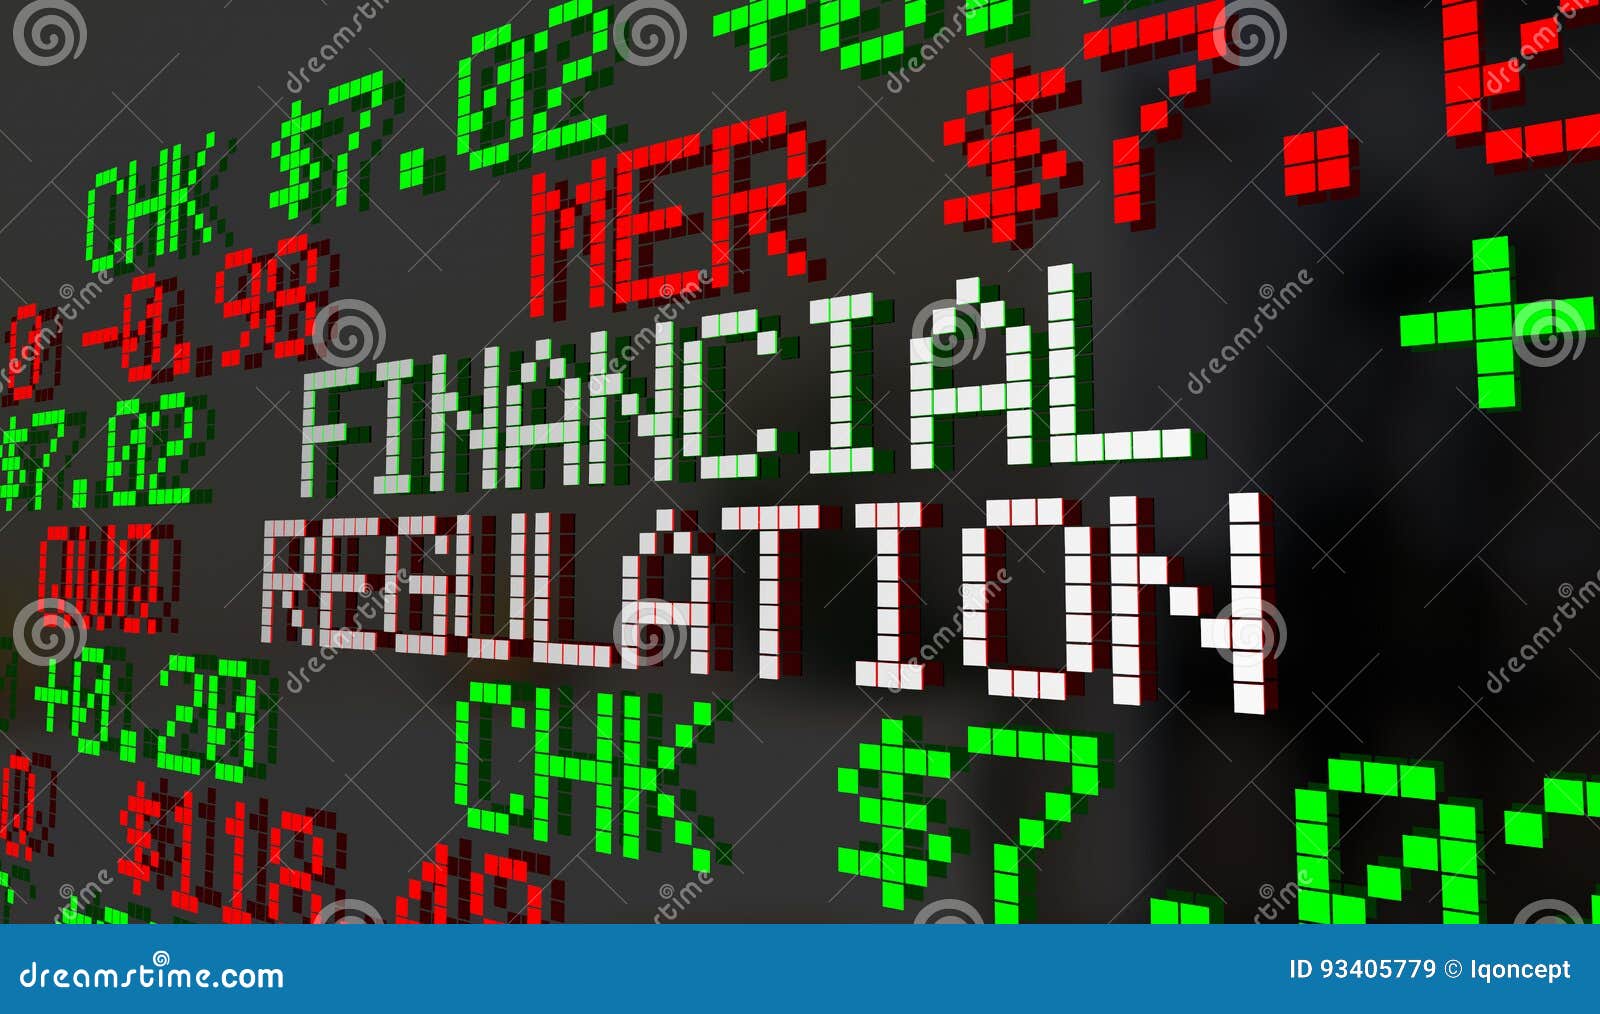 financial regulation government control oversight stock market 3